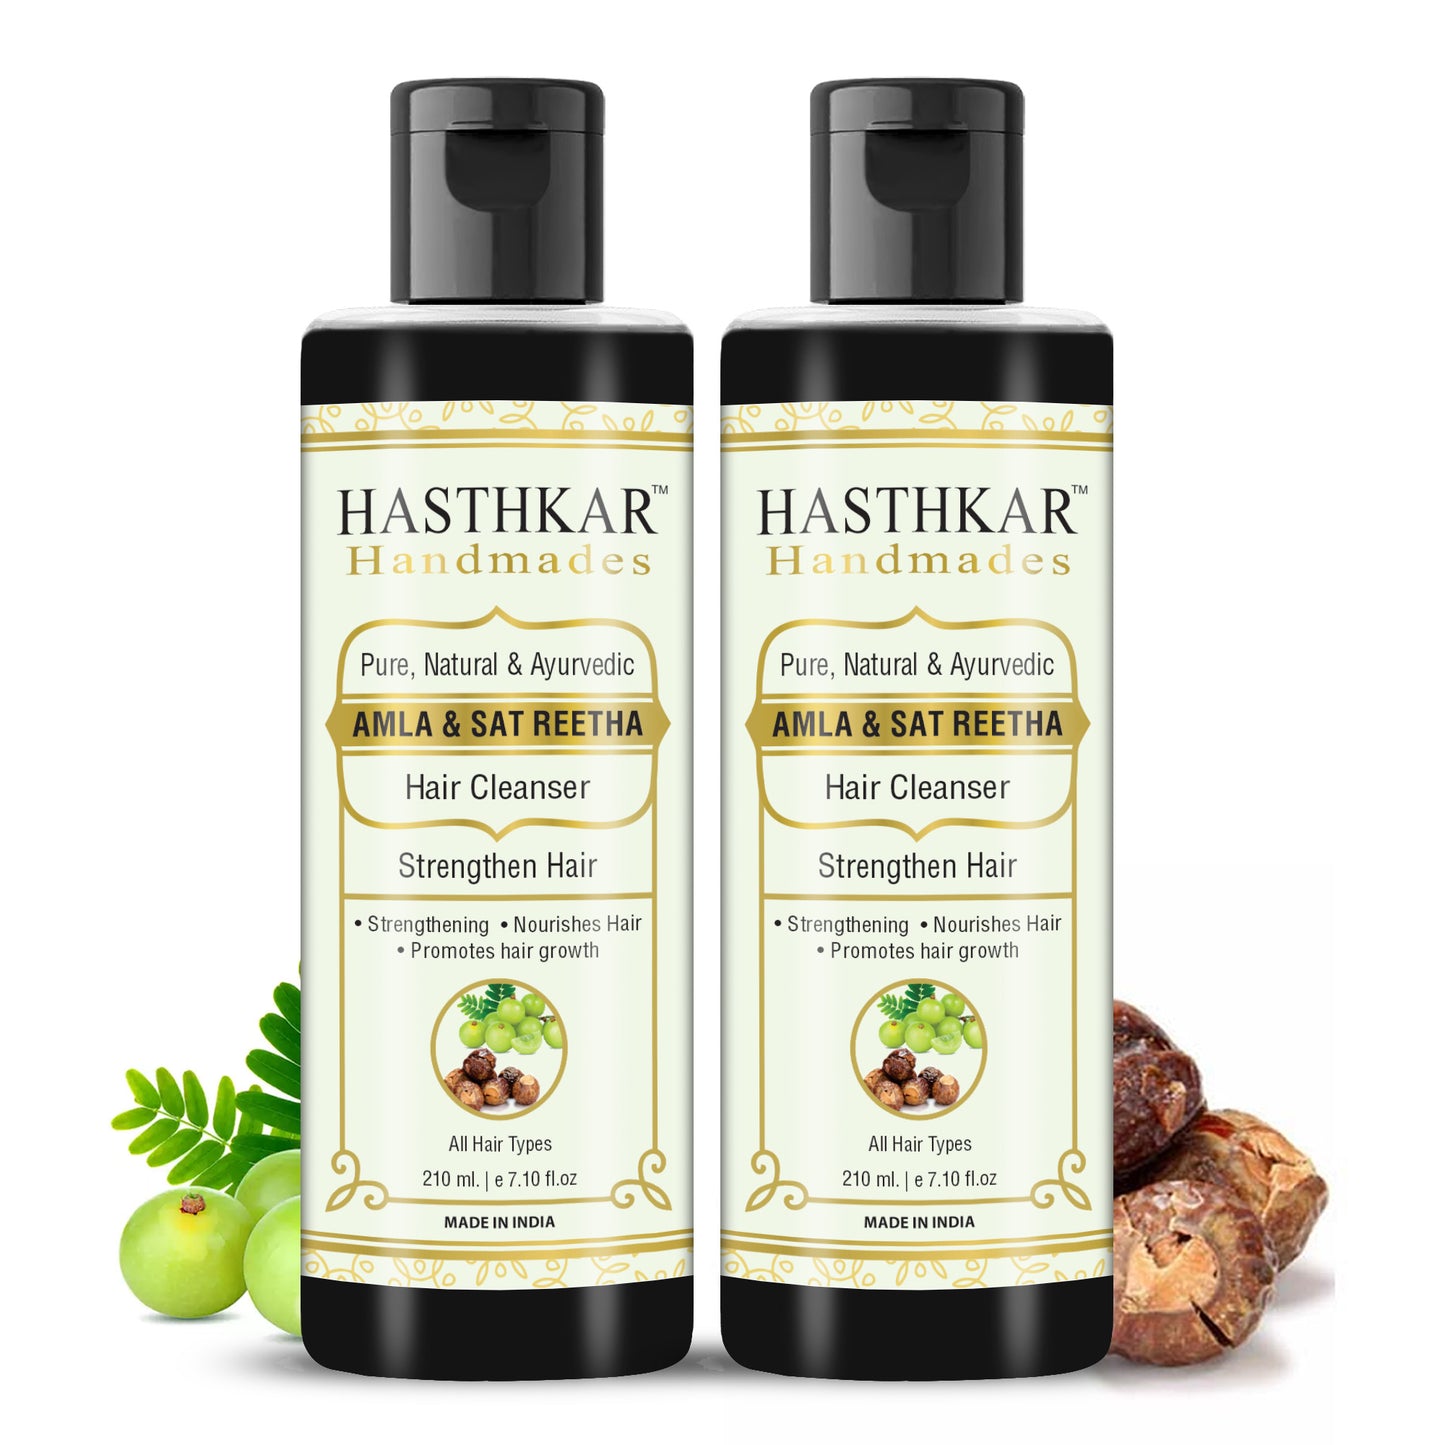 Hasthkar handmades amla sat reetha hair cleanser shampoo men women pack of 2